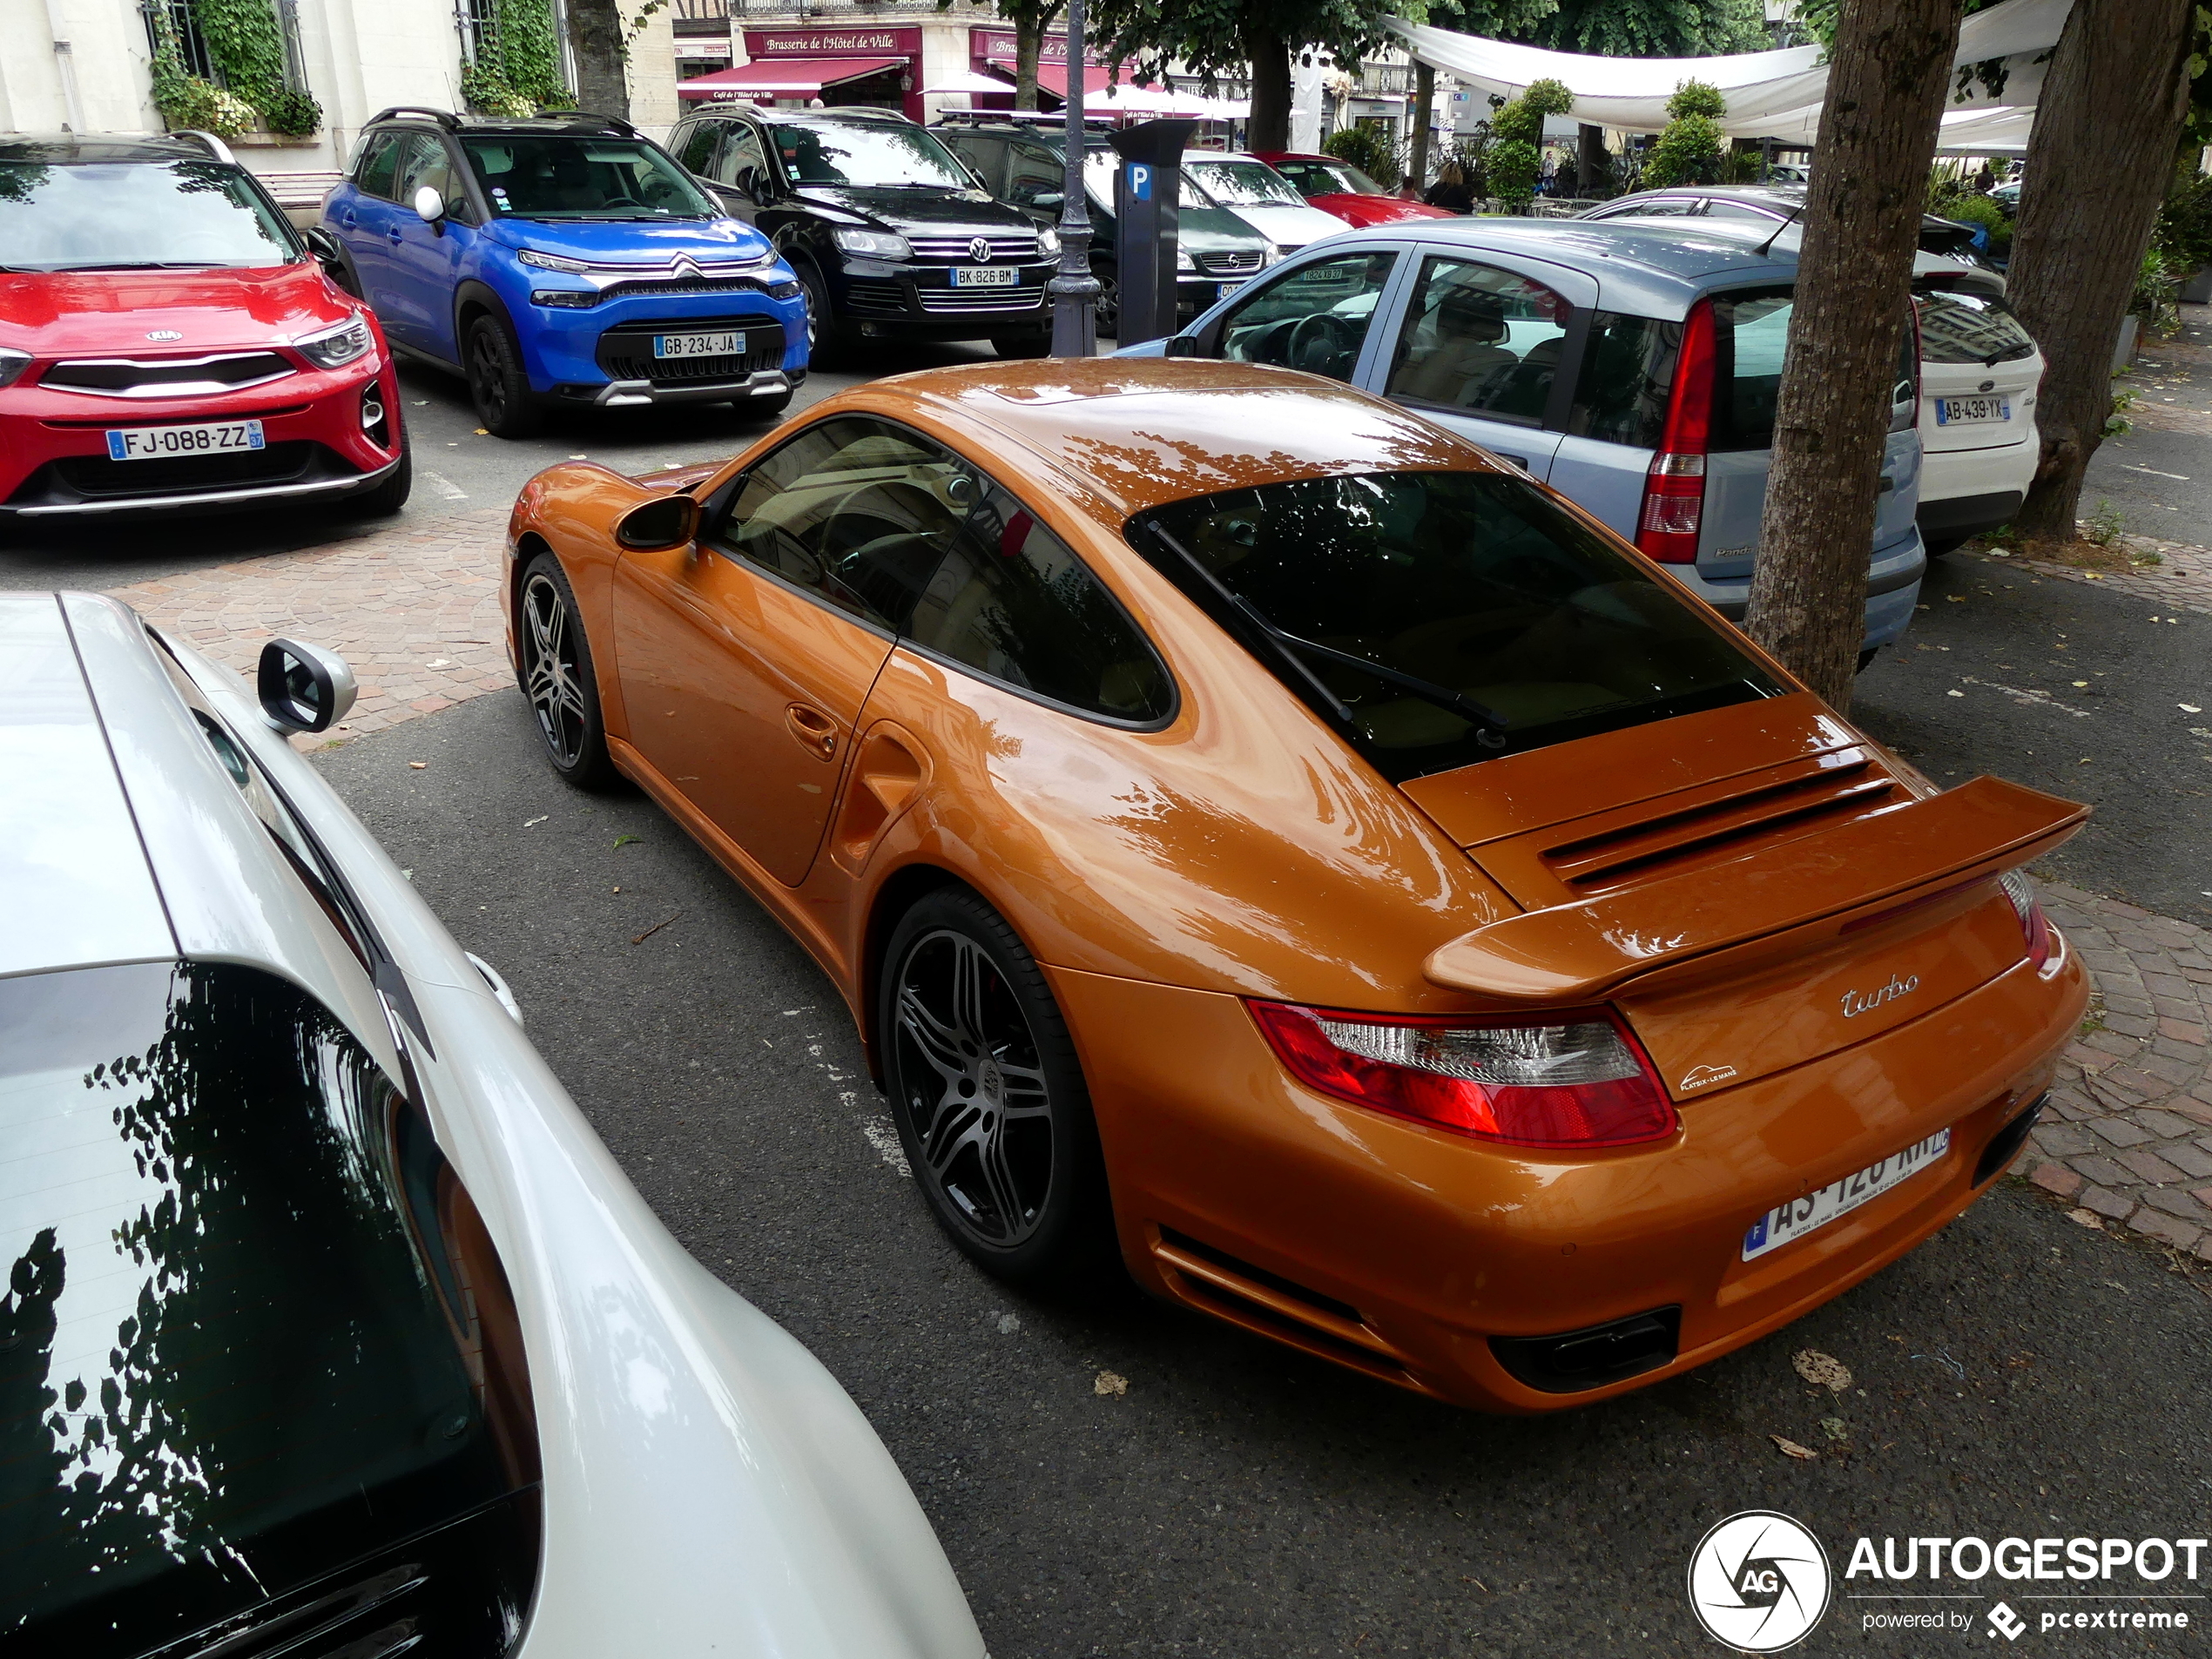 Bruin of oranje, welke Porsche Turbo kies jij?